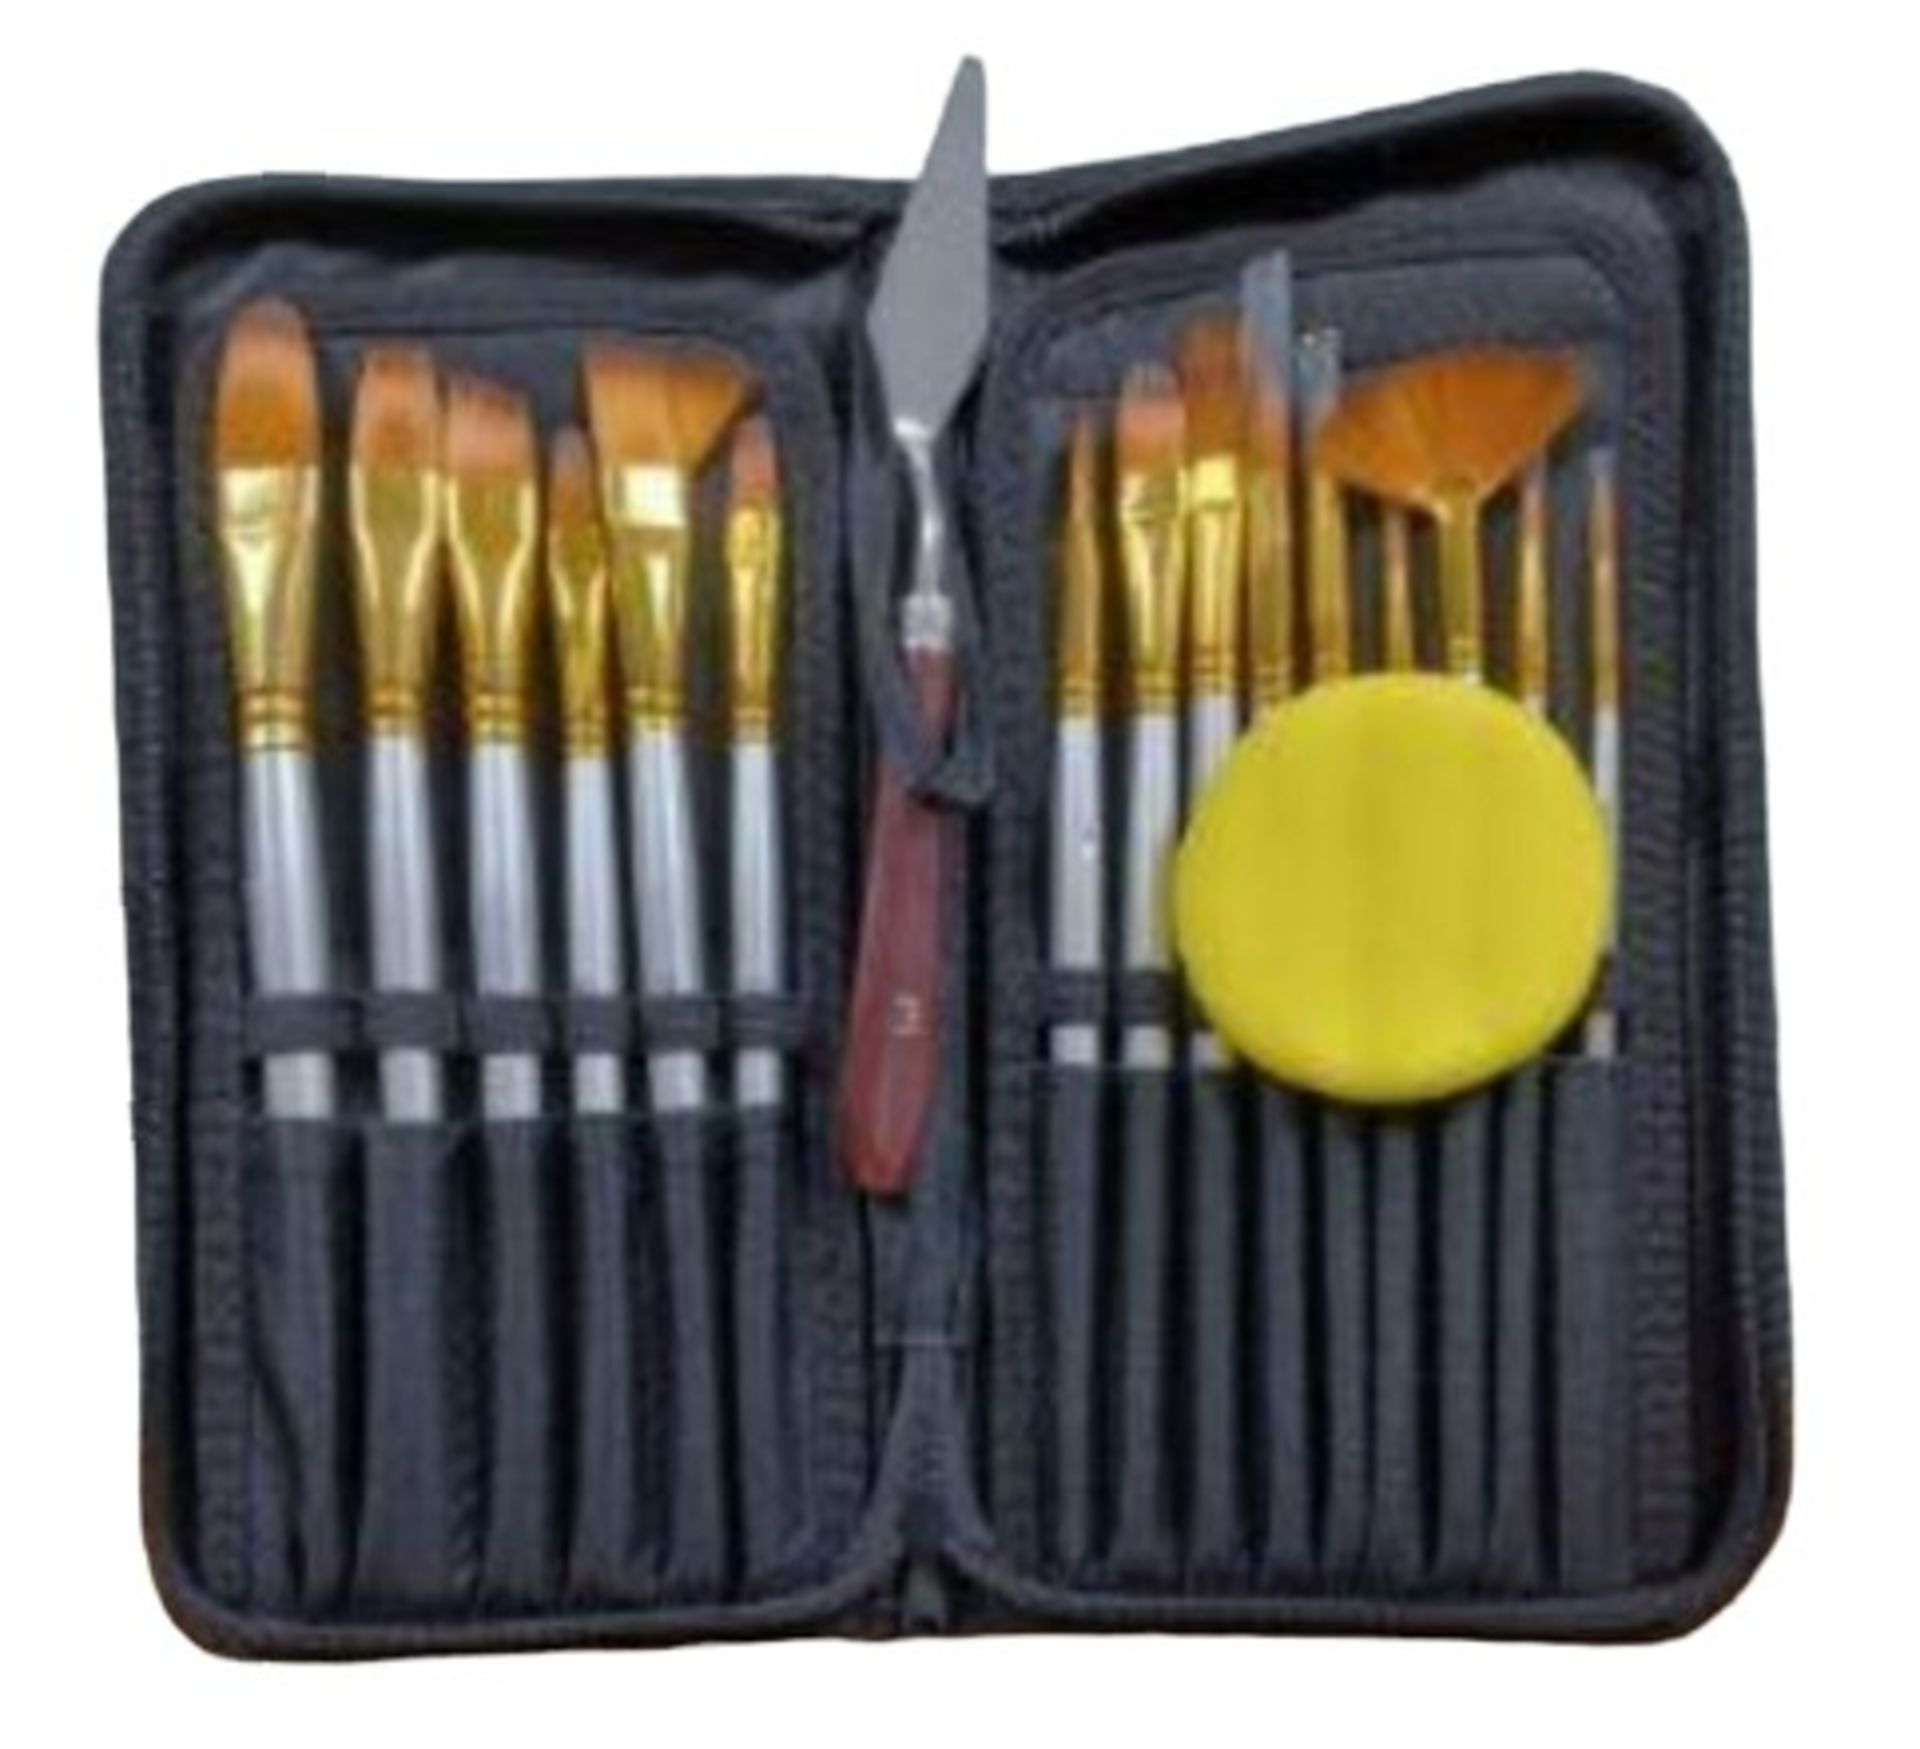 5 x 15 Piece Artists Paint Brush Set & Case Knife & Sponge Included